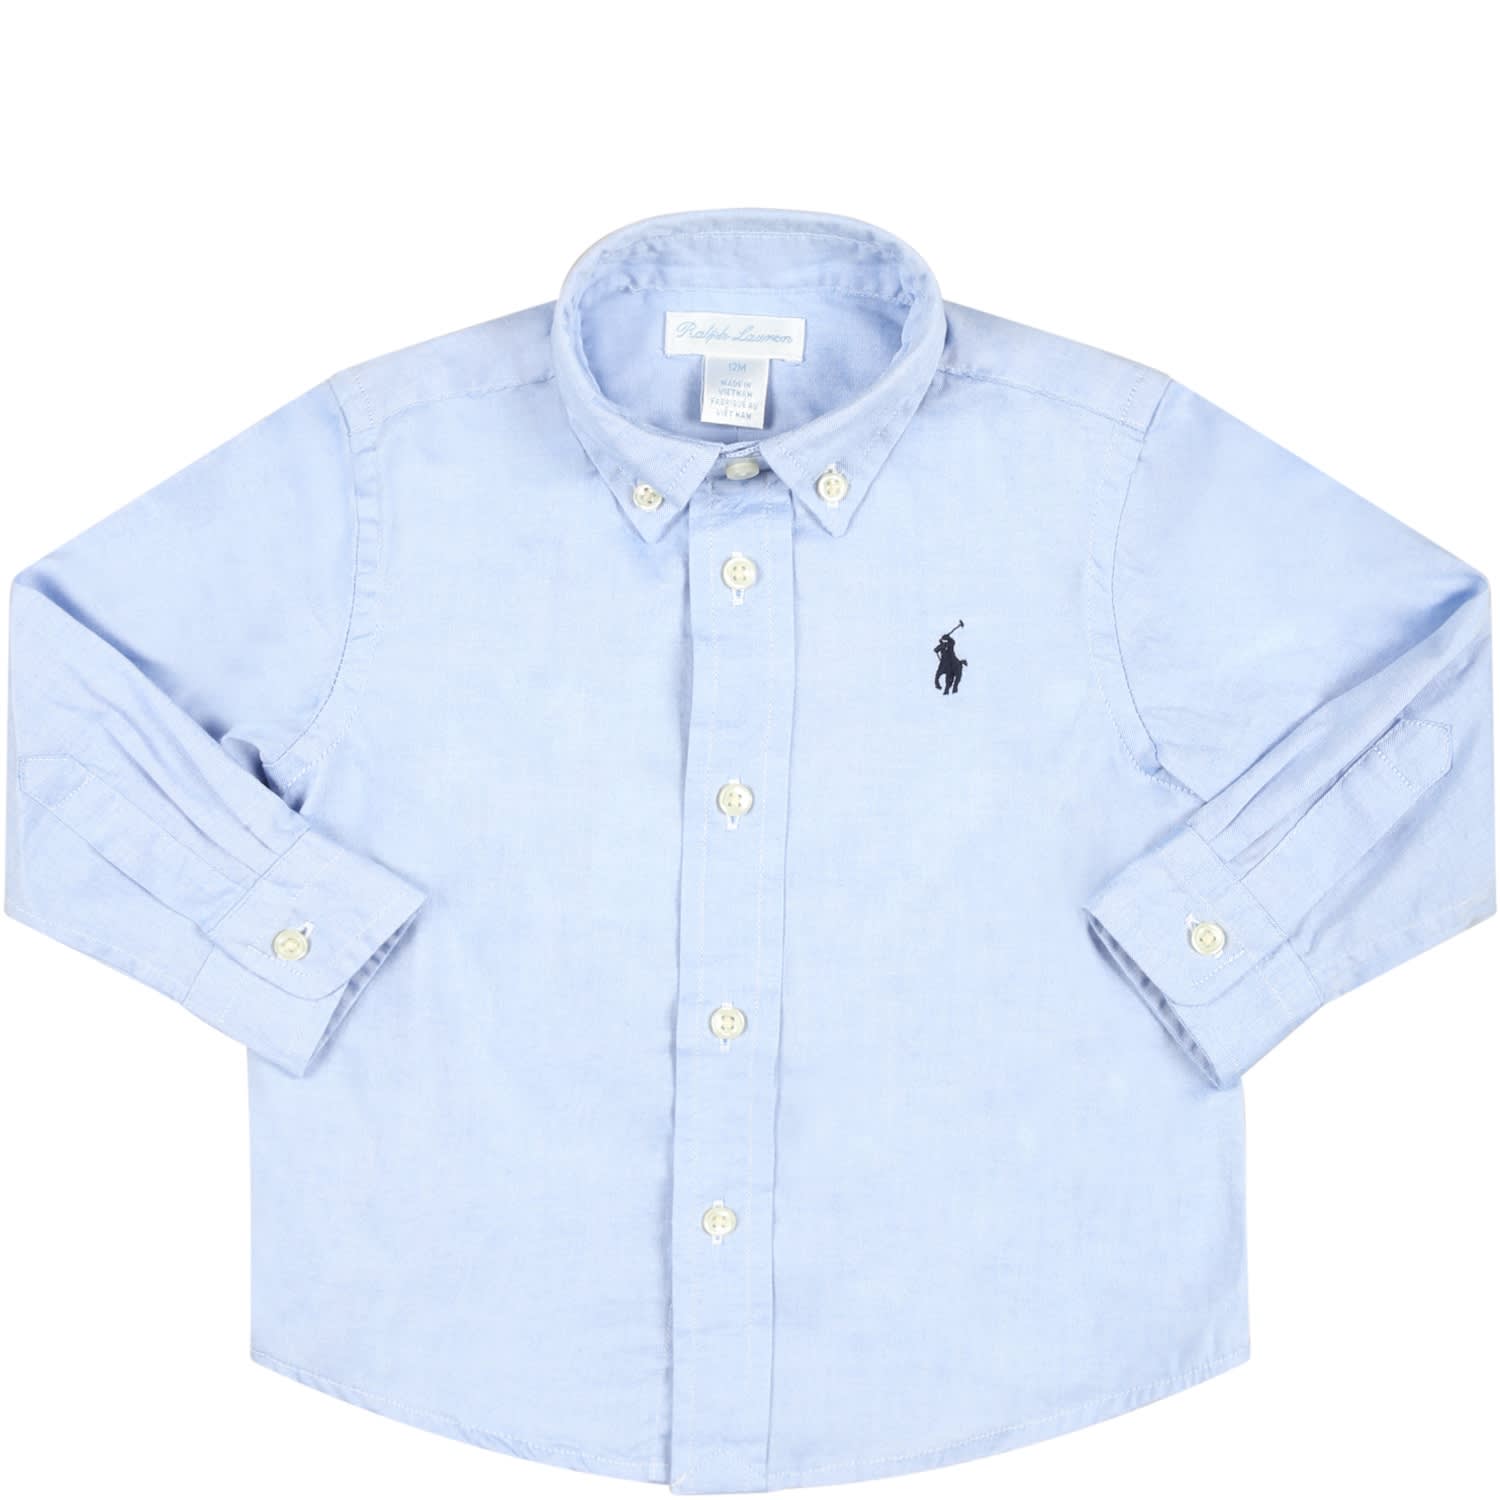 Ralph Lauren Light Blue Shirt For Baby Boy With Pony Logo